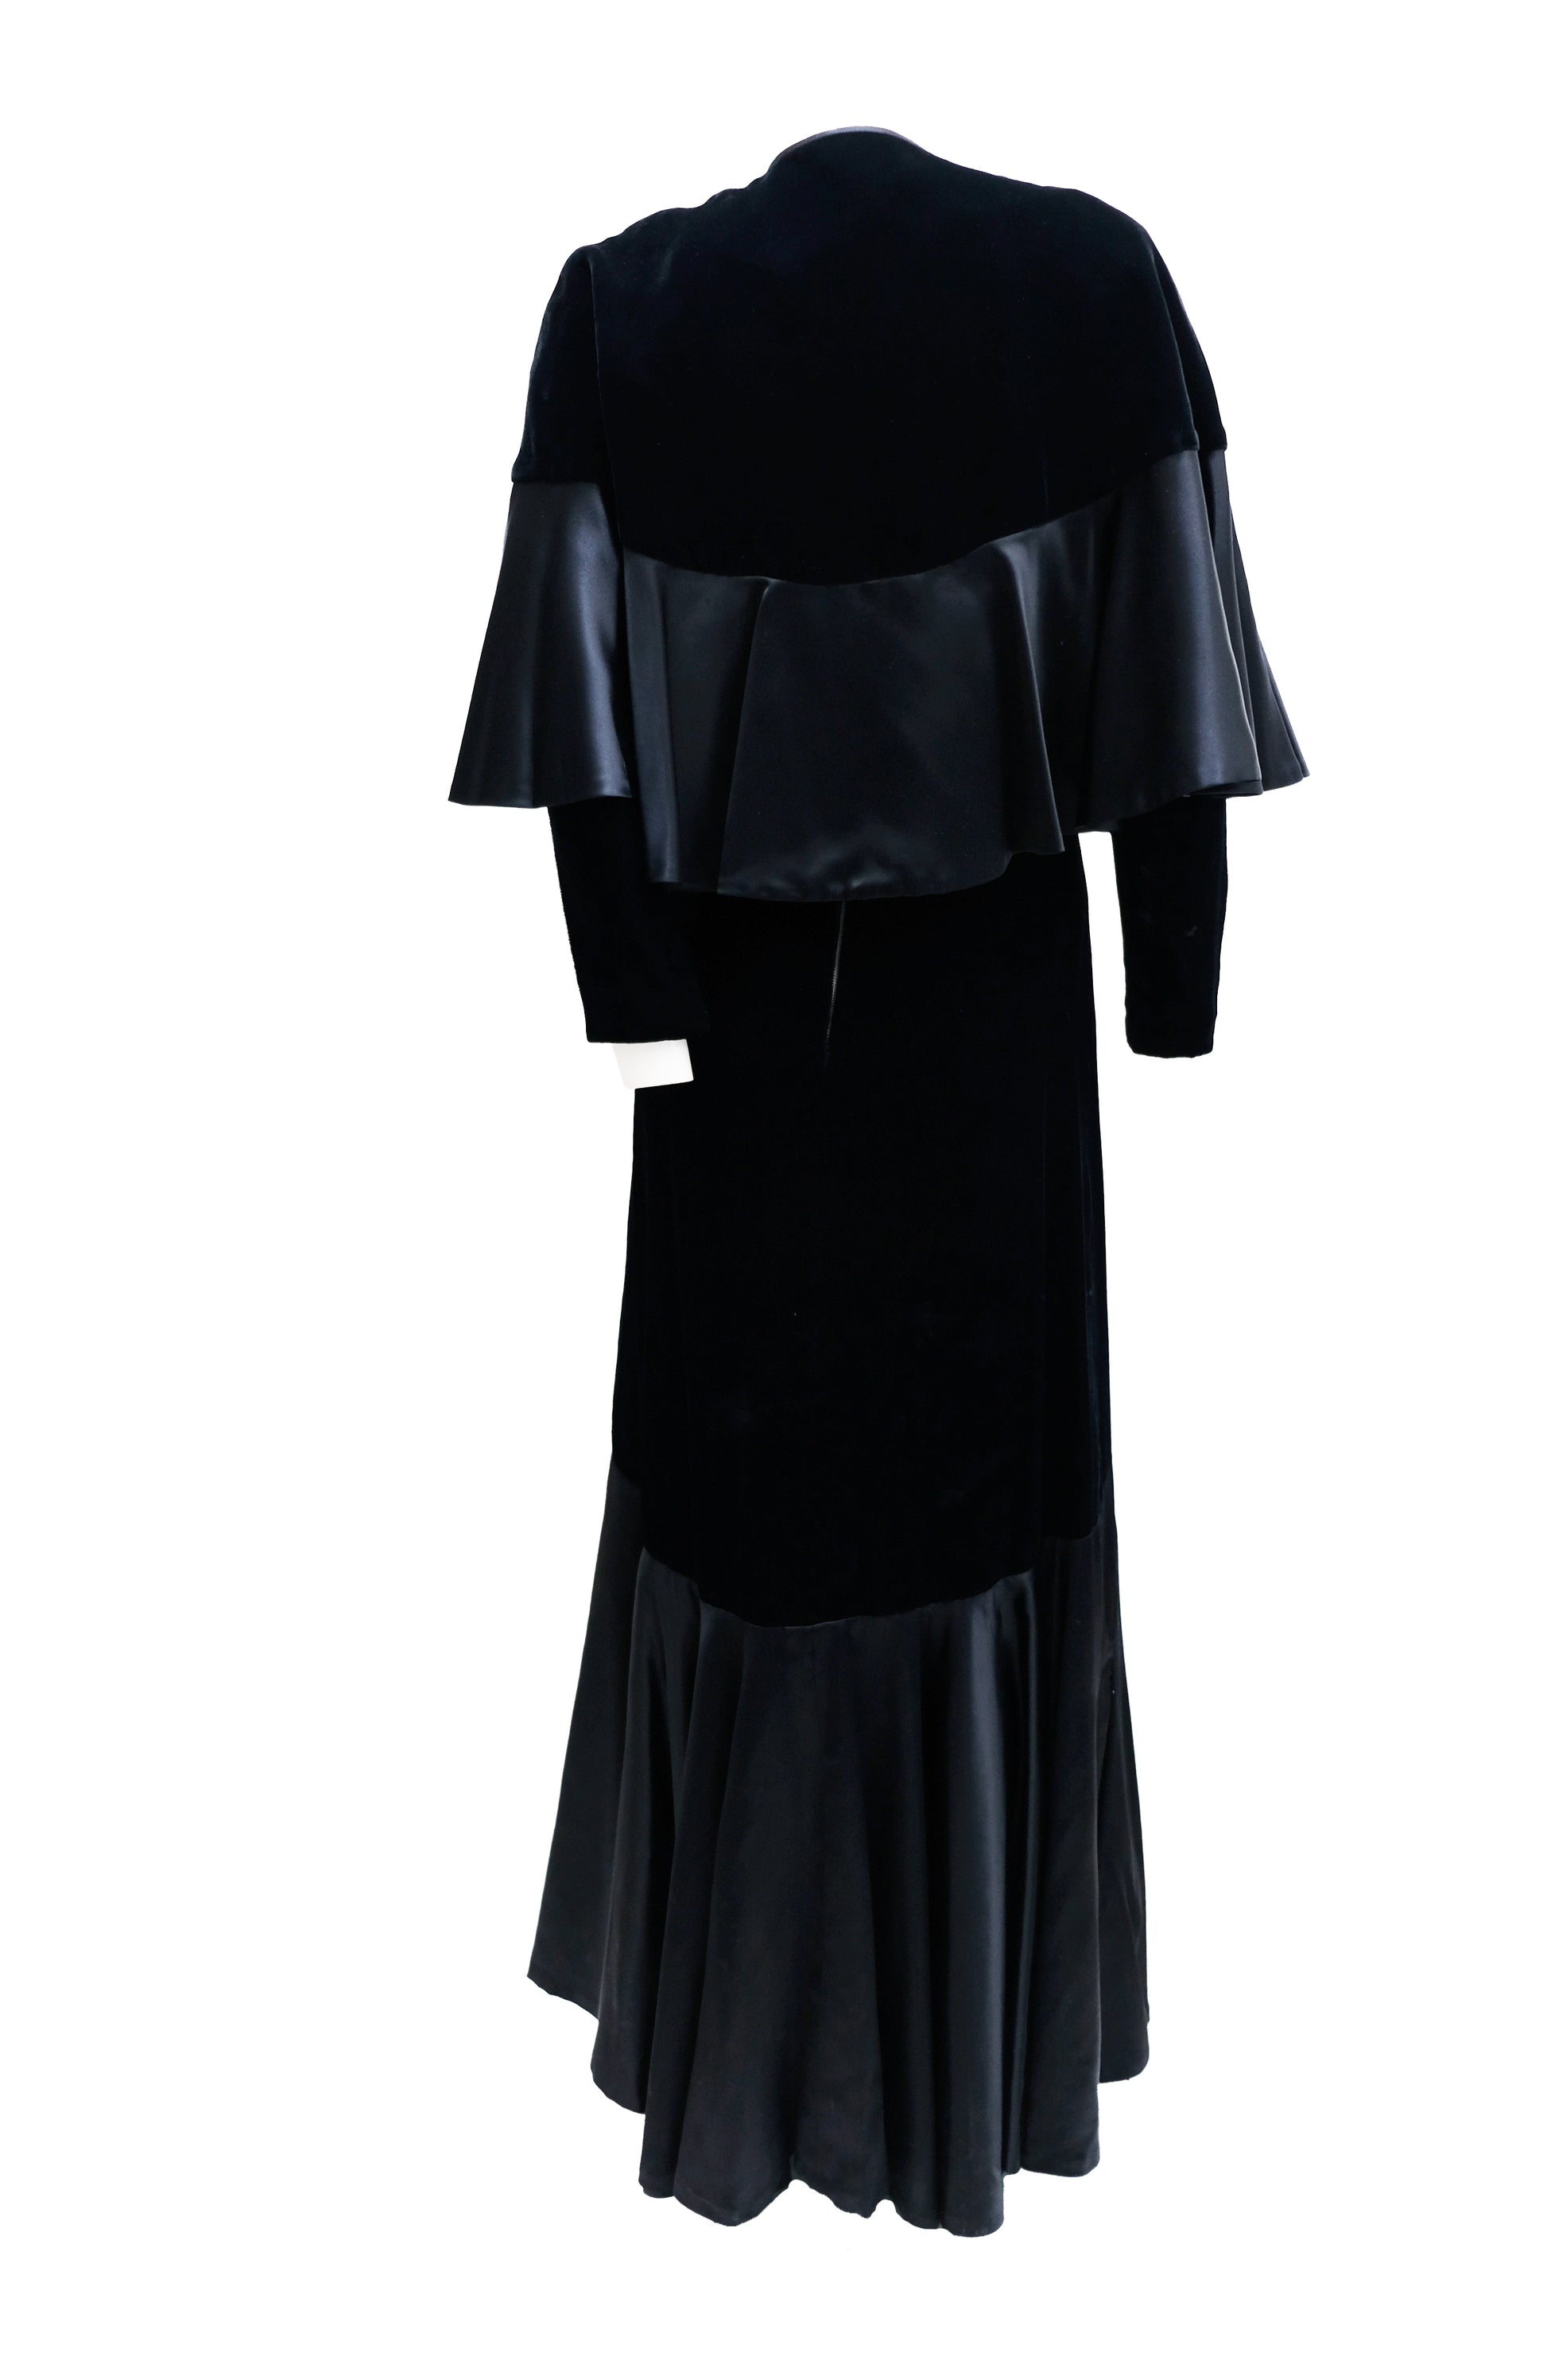 Graham Price Vintage Black Velvet and Satin Fishtail Maxi Dress with Cape, UK10